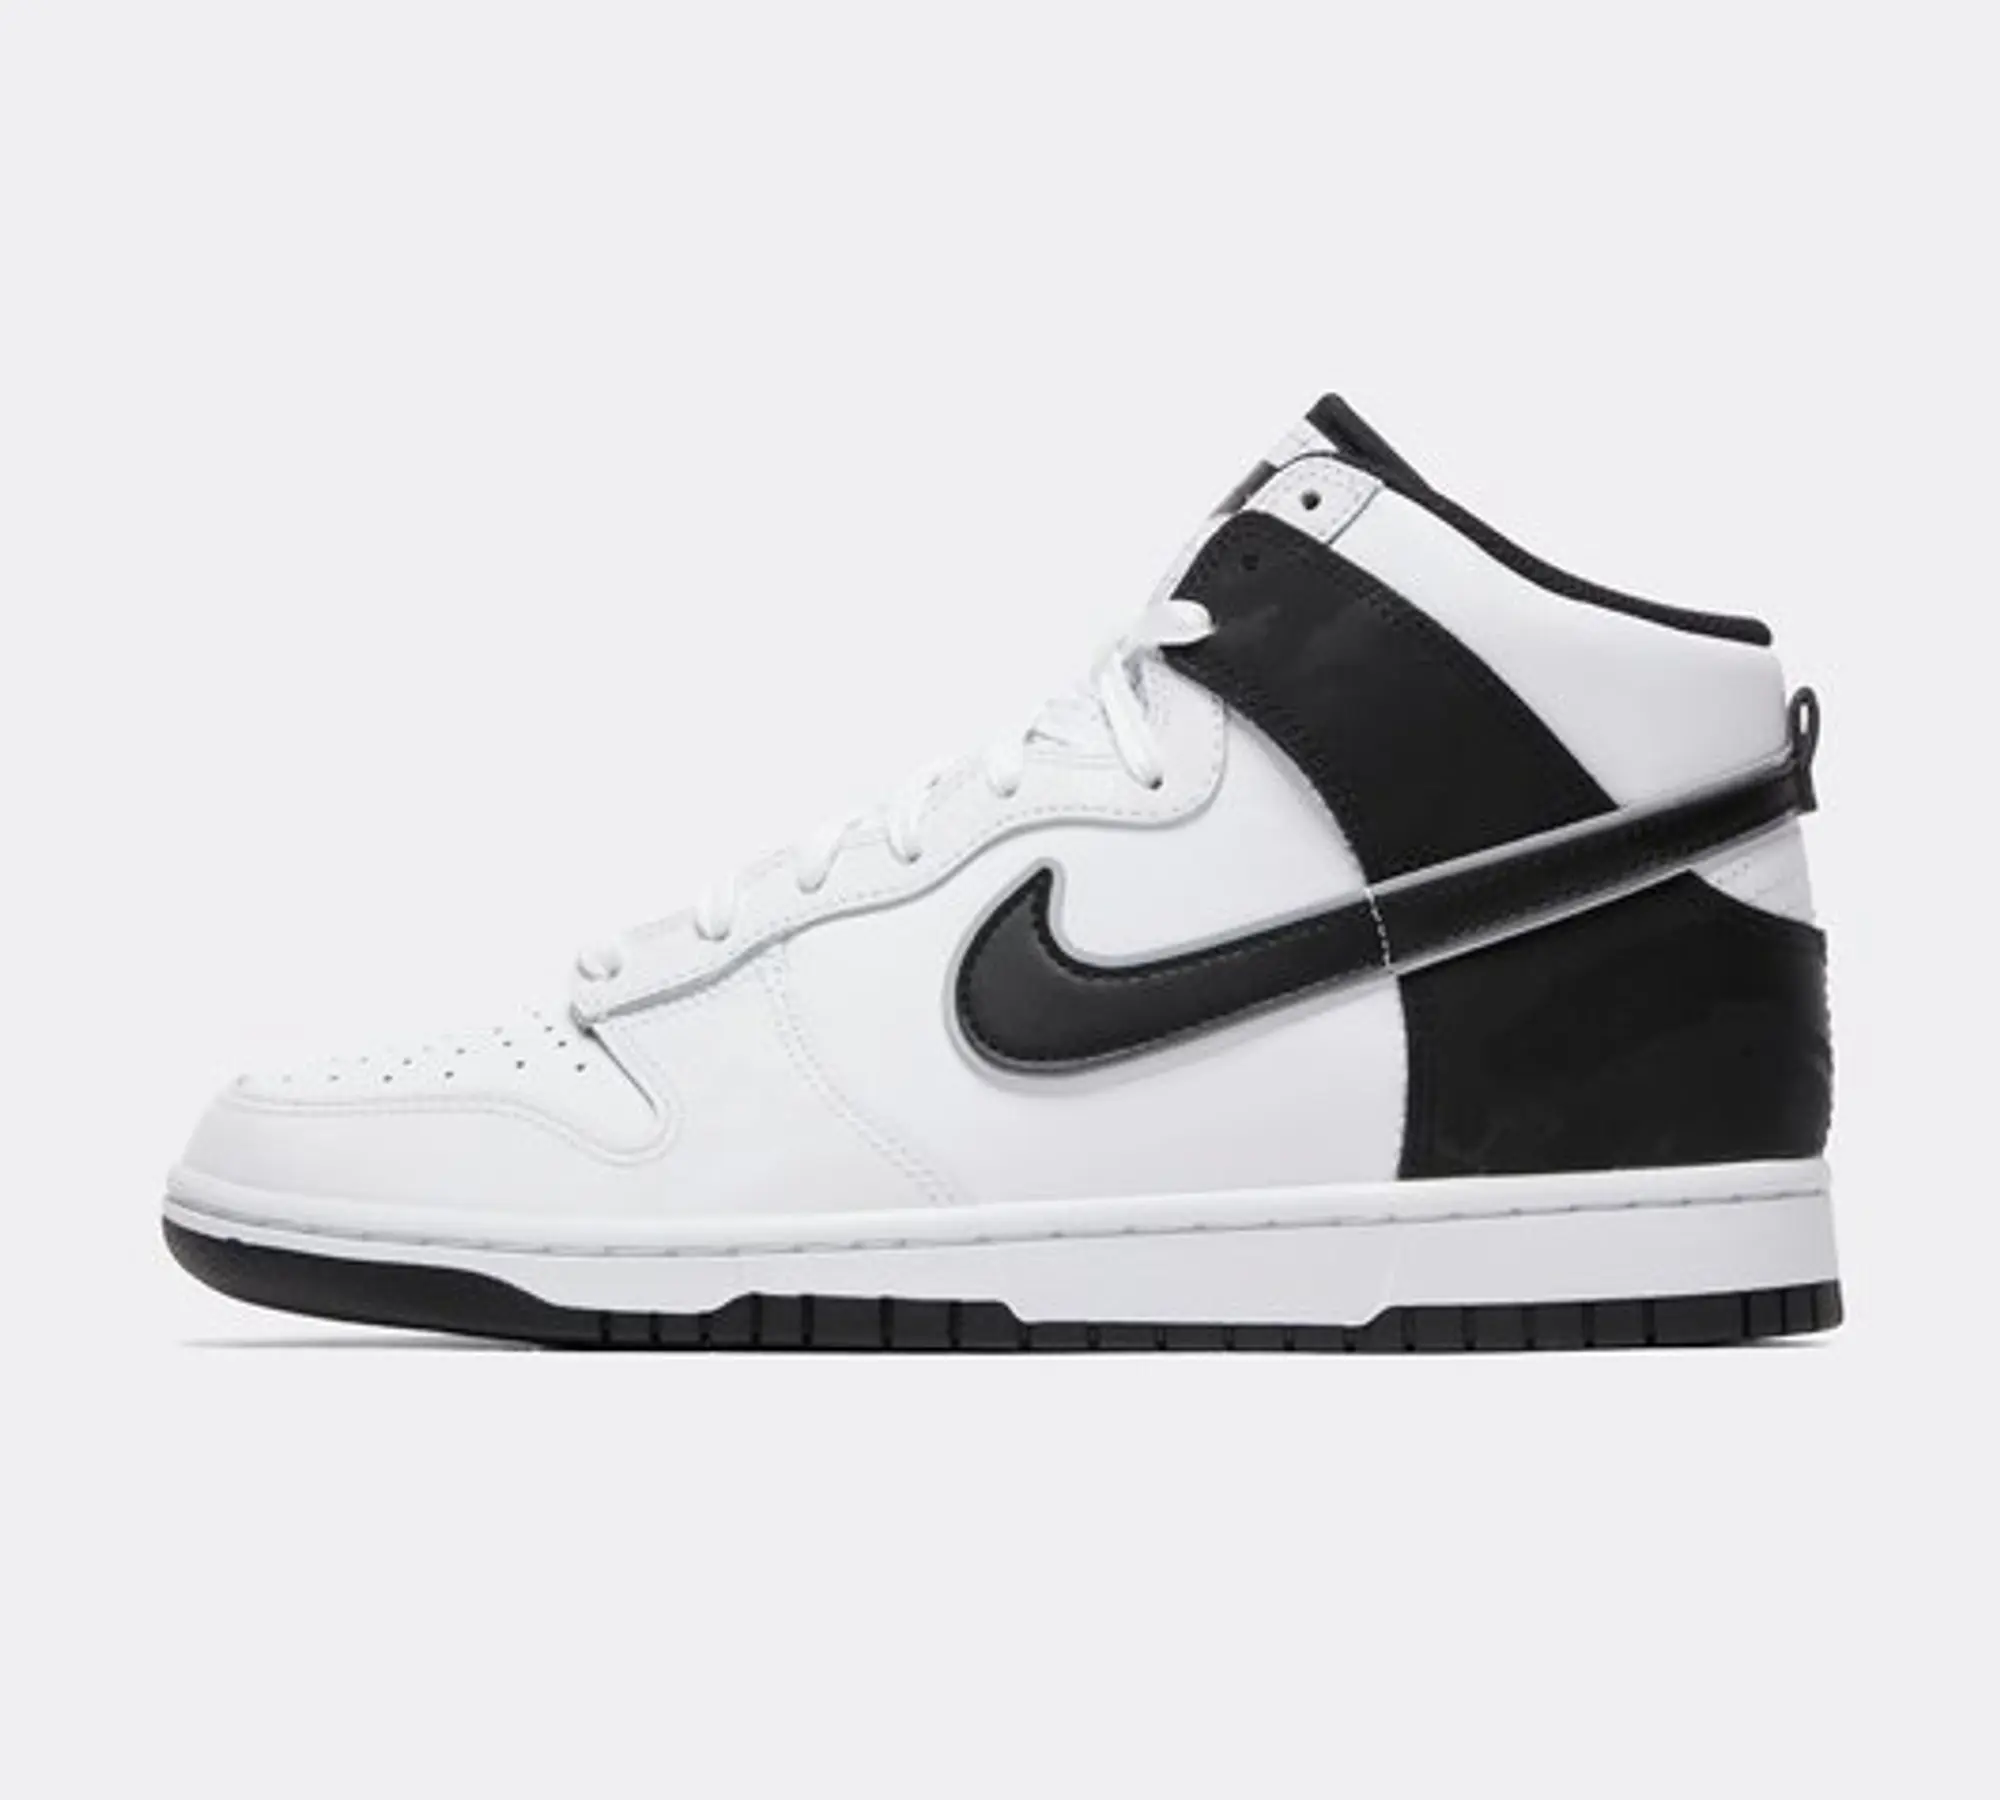 Nike Dunk High Retro SE White Black Camo Shoes